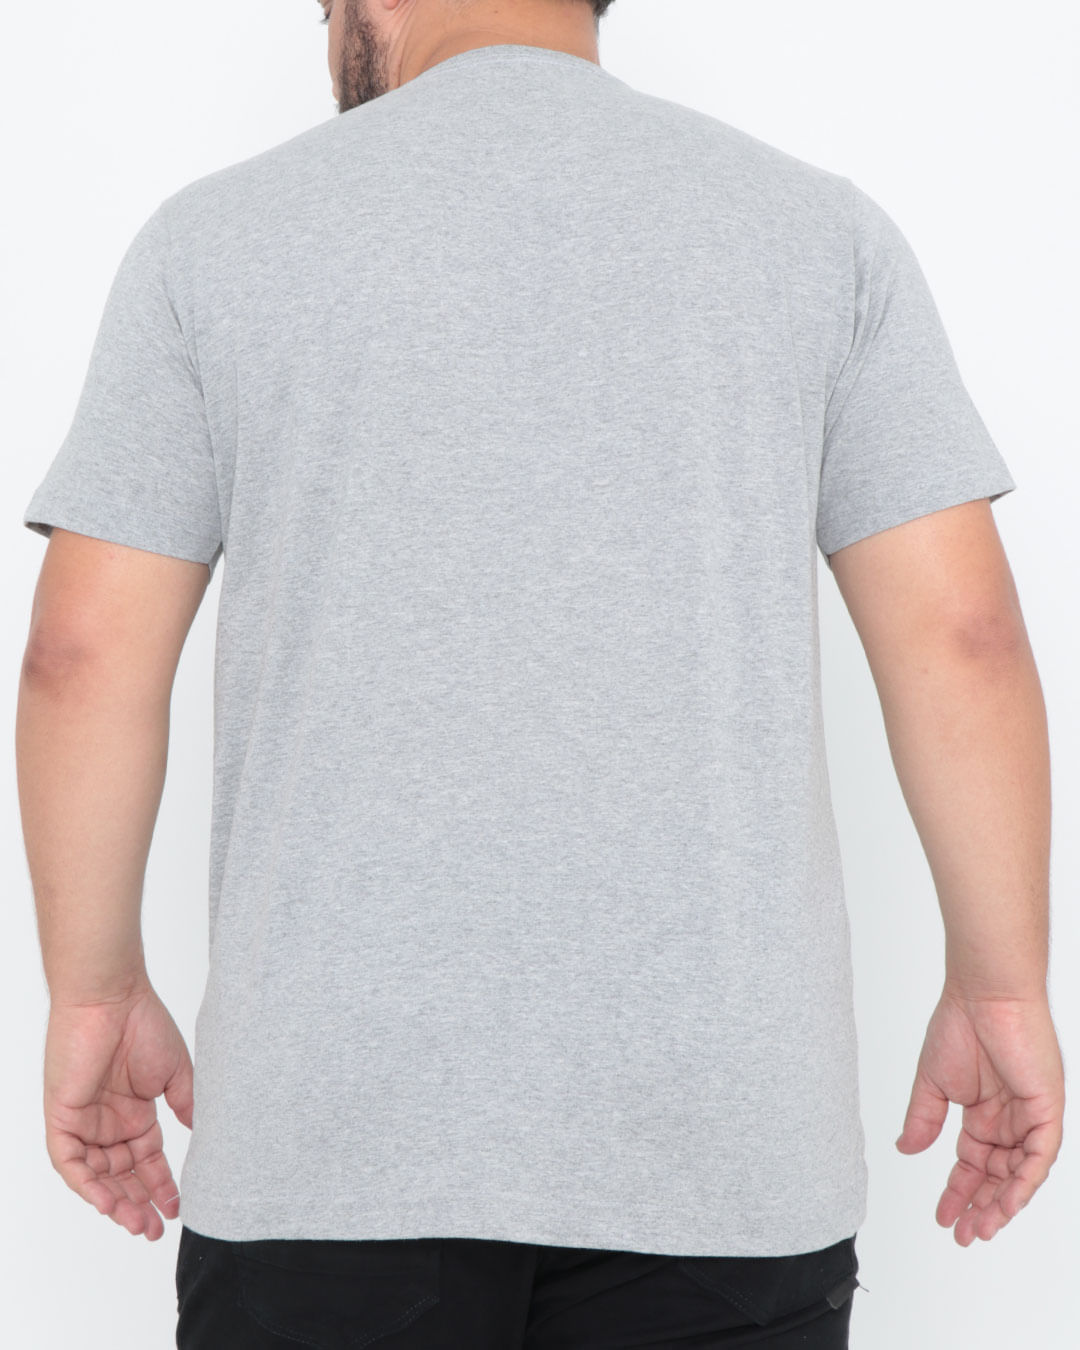 Camiseta-Plus-Size-Estampa-Frontal-Mescla-Cinza